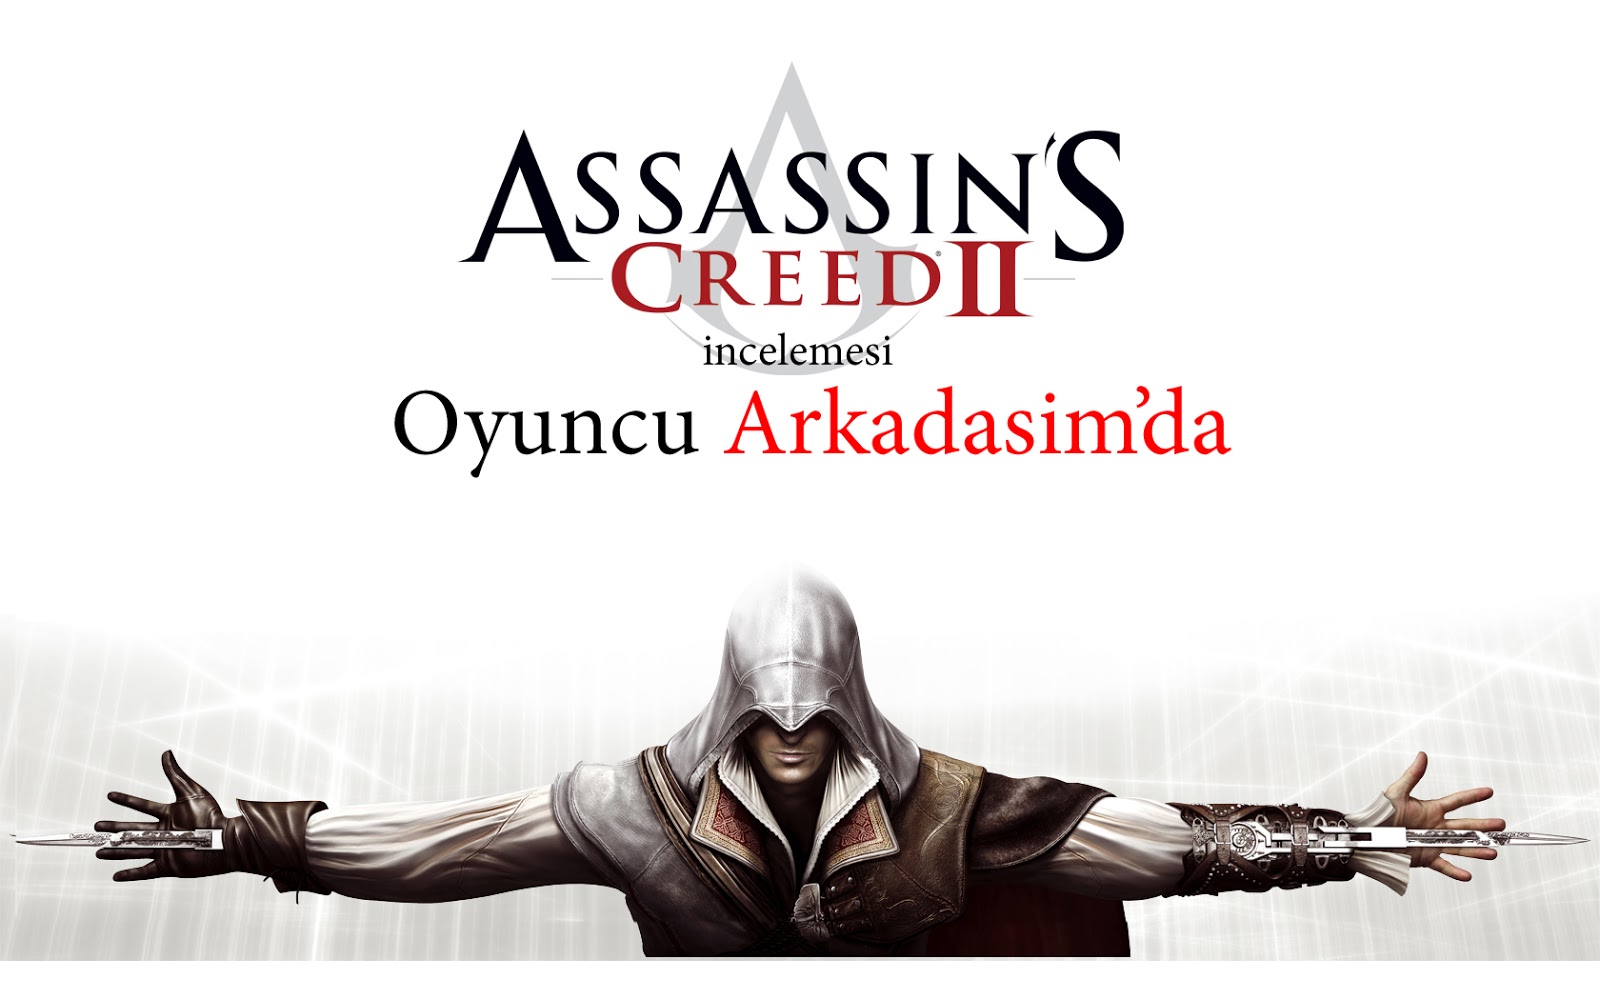 Assassins Creed 2 статуэтки. Ассасин Крид 2 плакат розыска. Исторические личности в Assassins Creed. Assassins Creed II управление. Русификатор ассасин крид 2